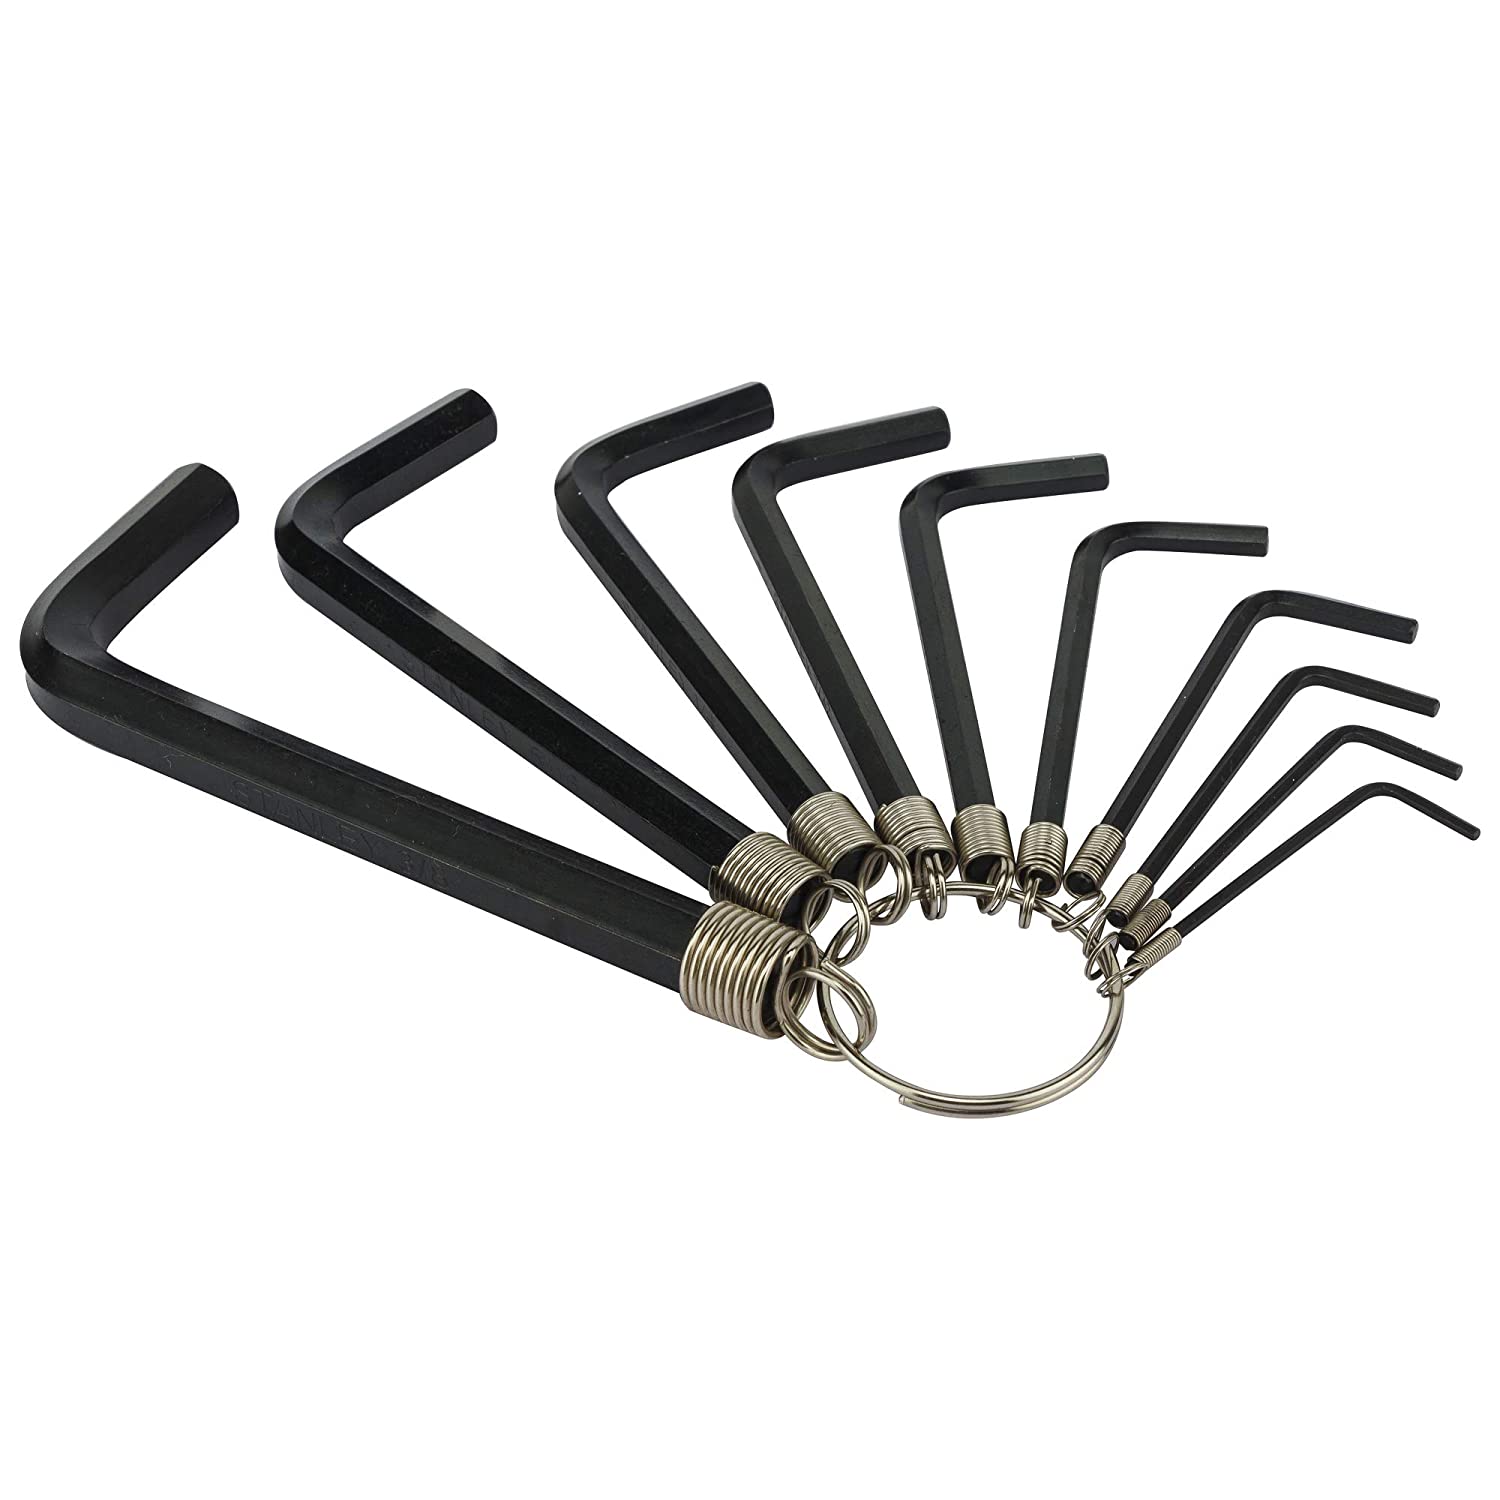 STANLEY 69-230 10-Piece Key Ring Imperial Allen Hex Key Set (Black)